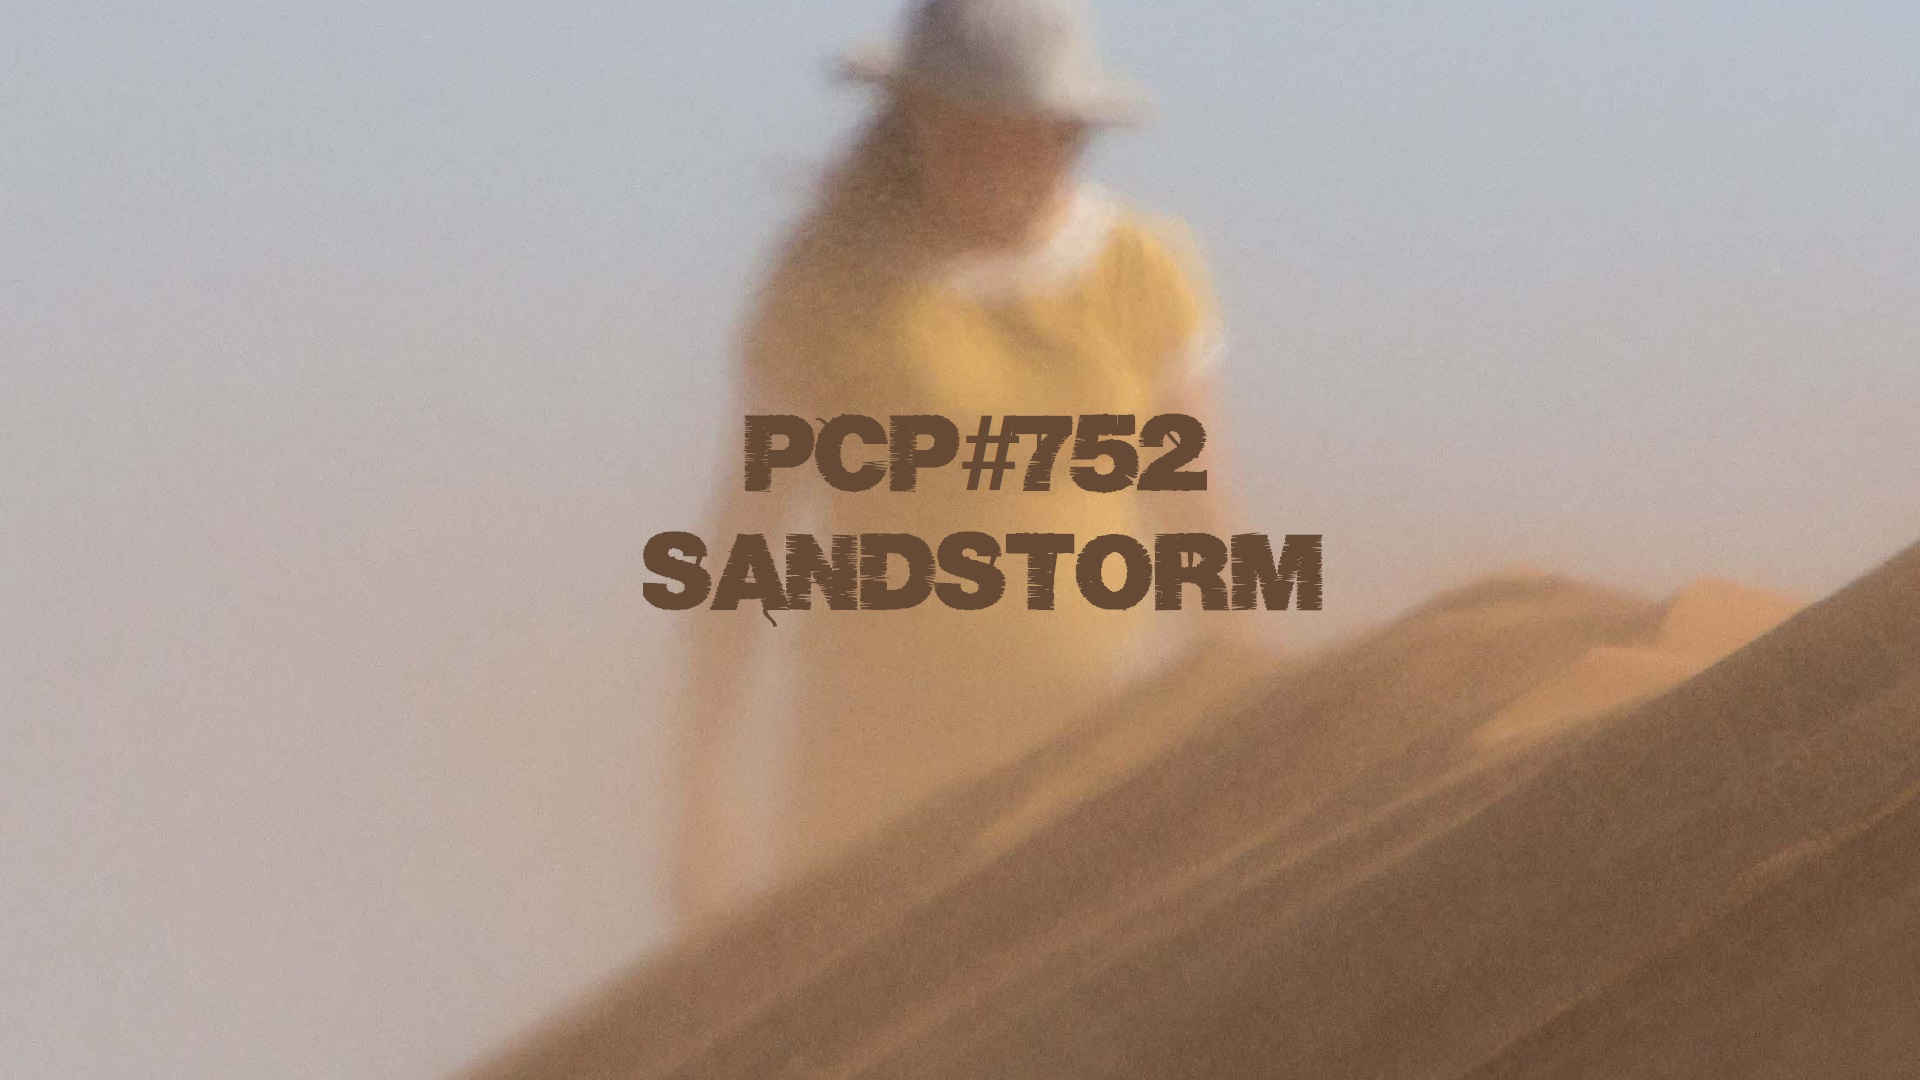 PCP#752... Sandstorm...